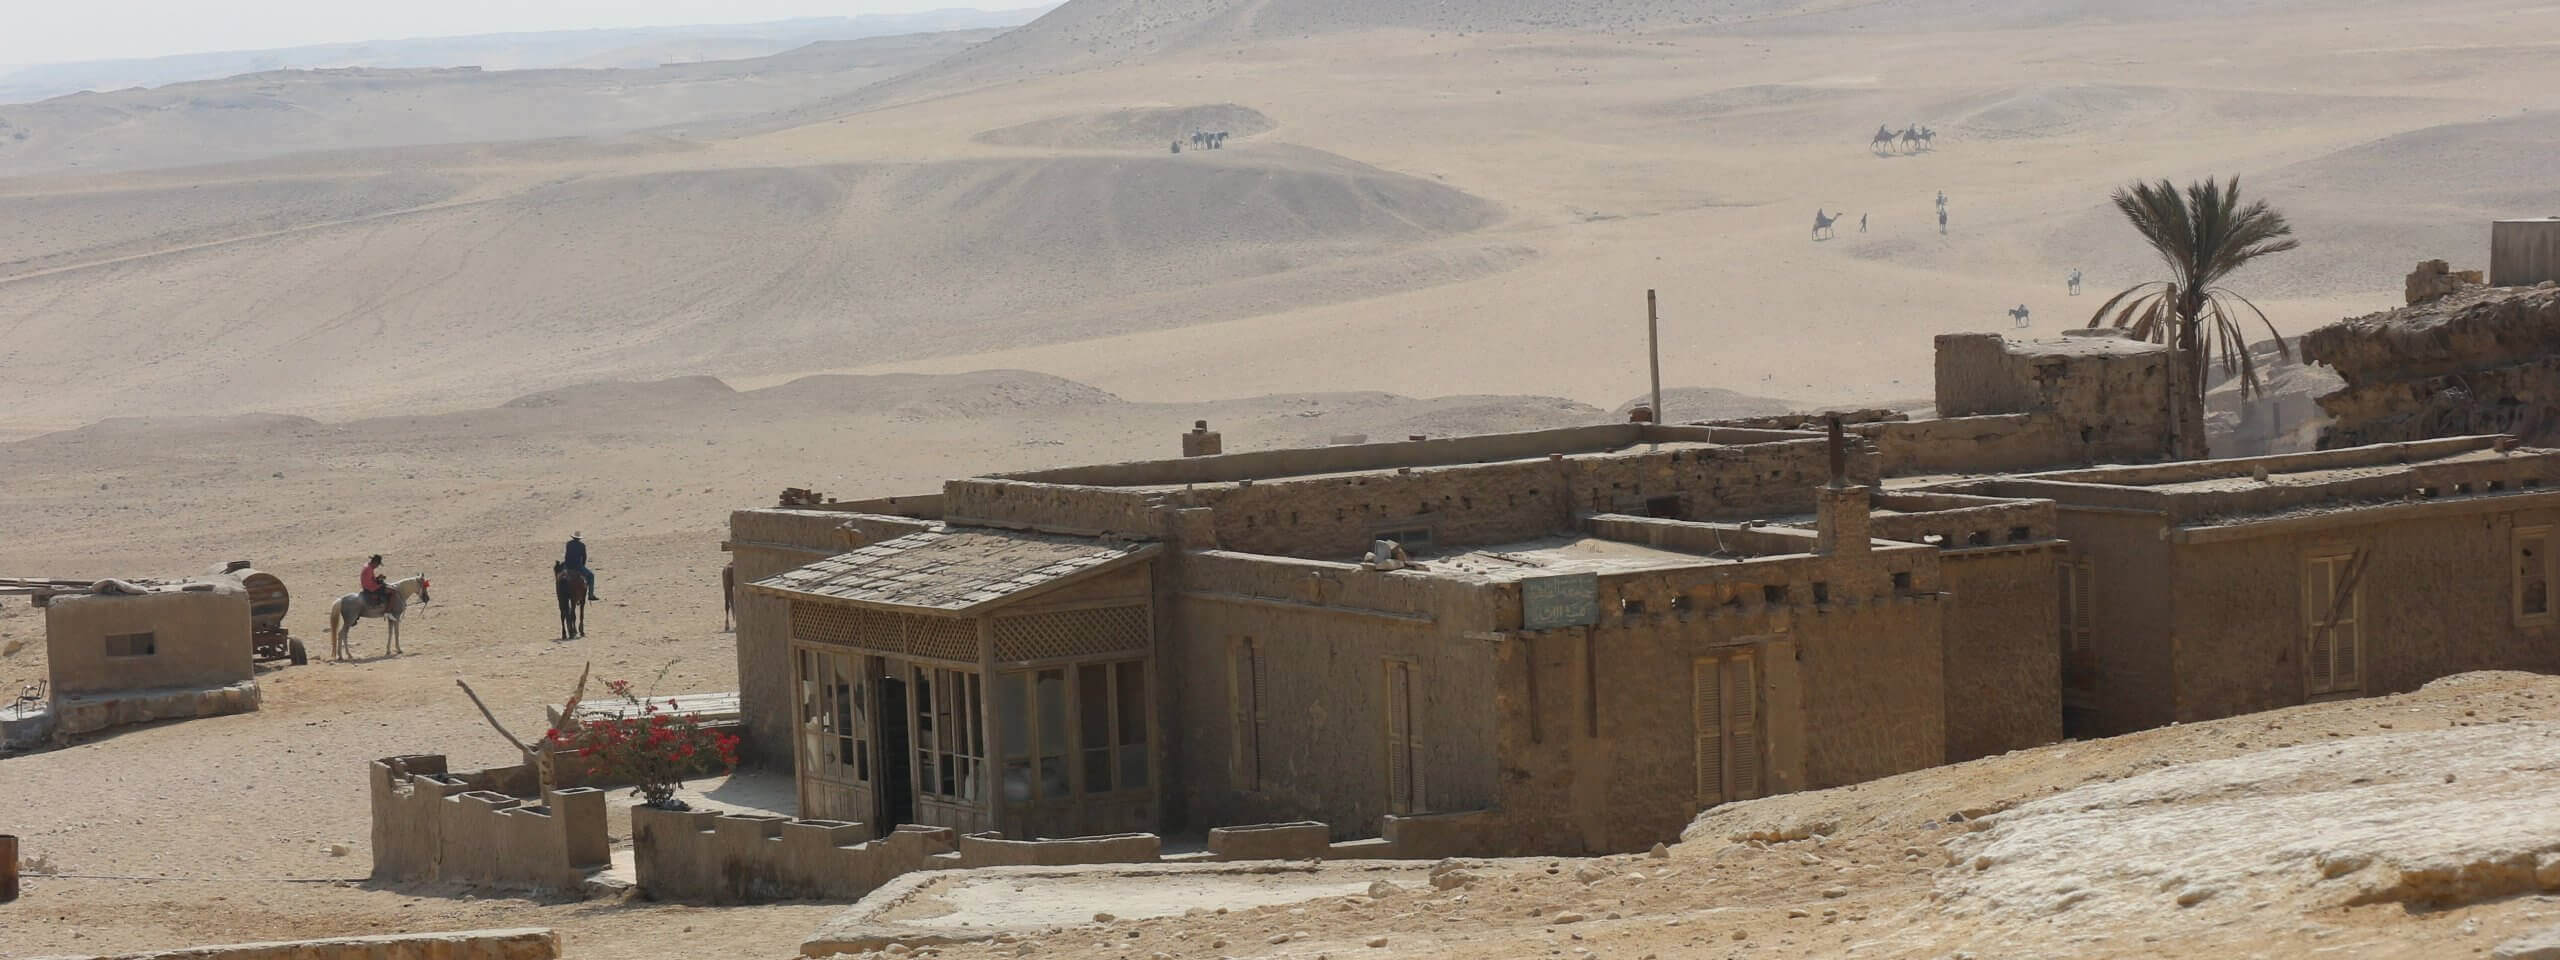 Caravanserai in the desert near Cairo